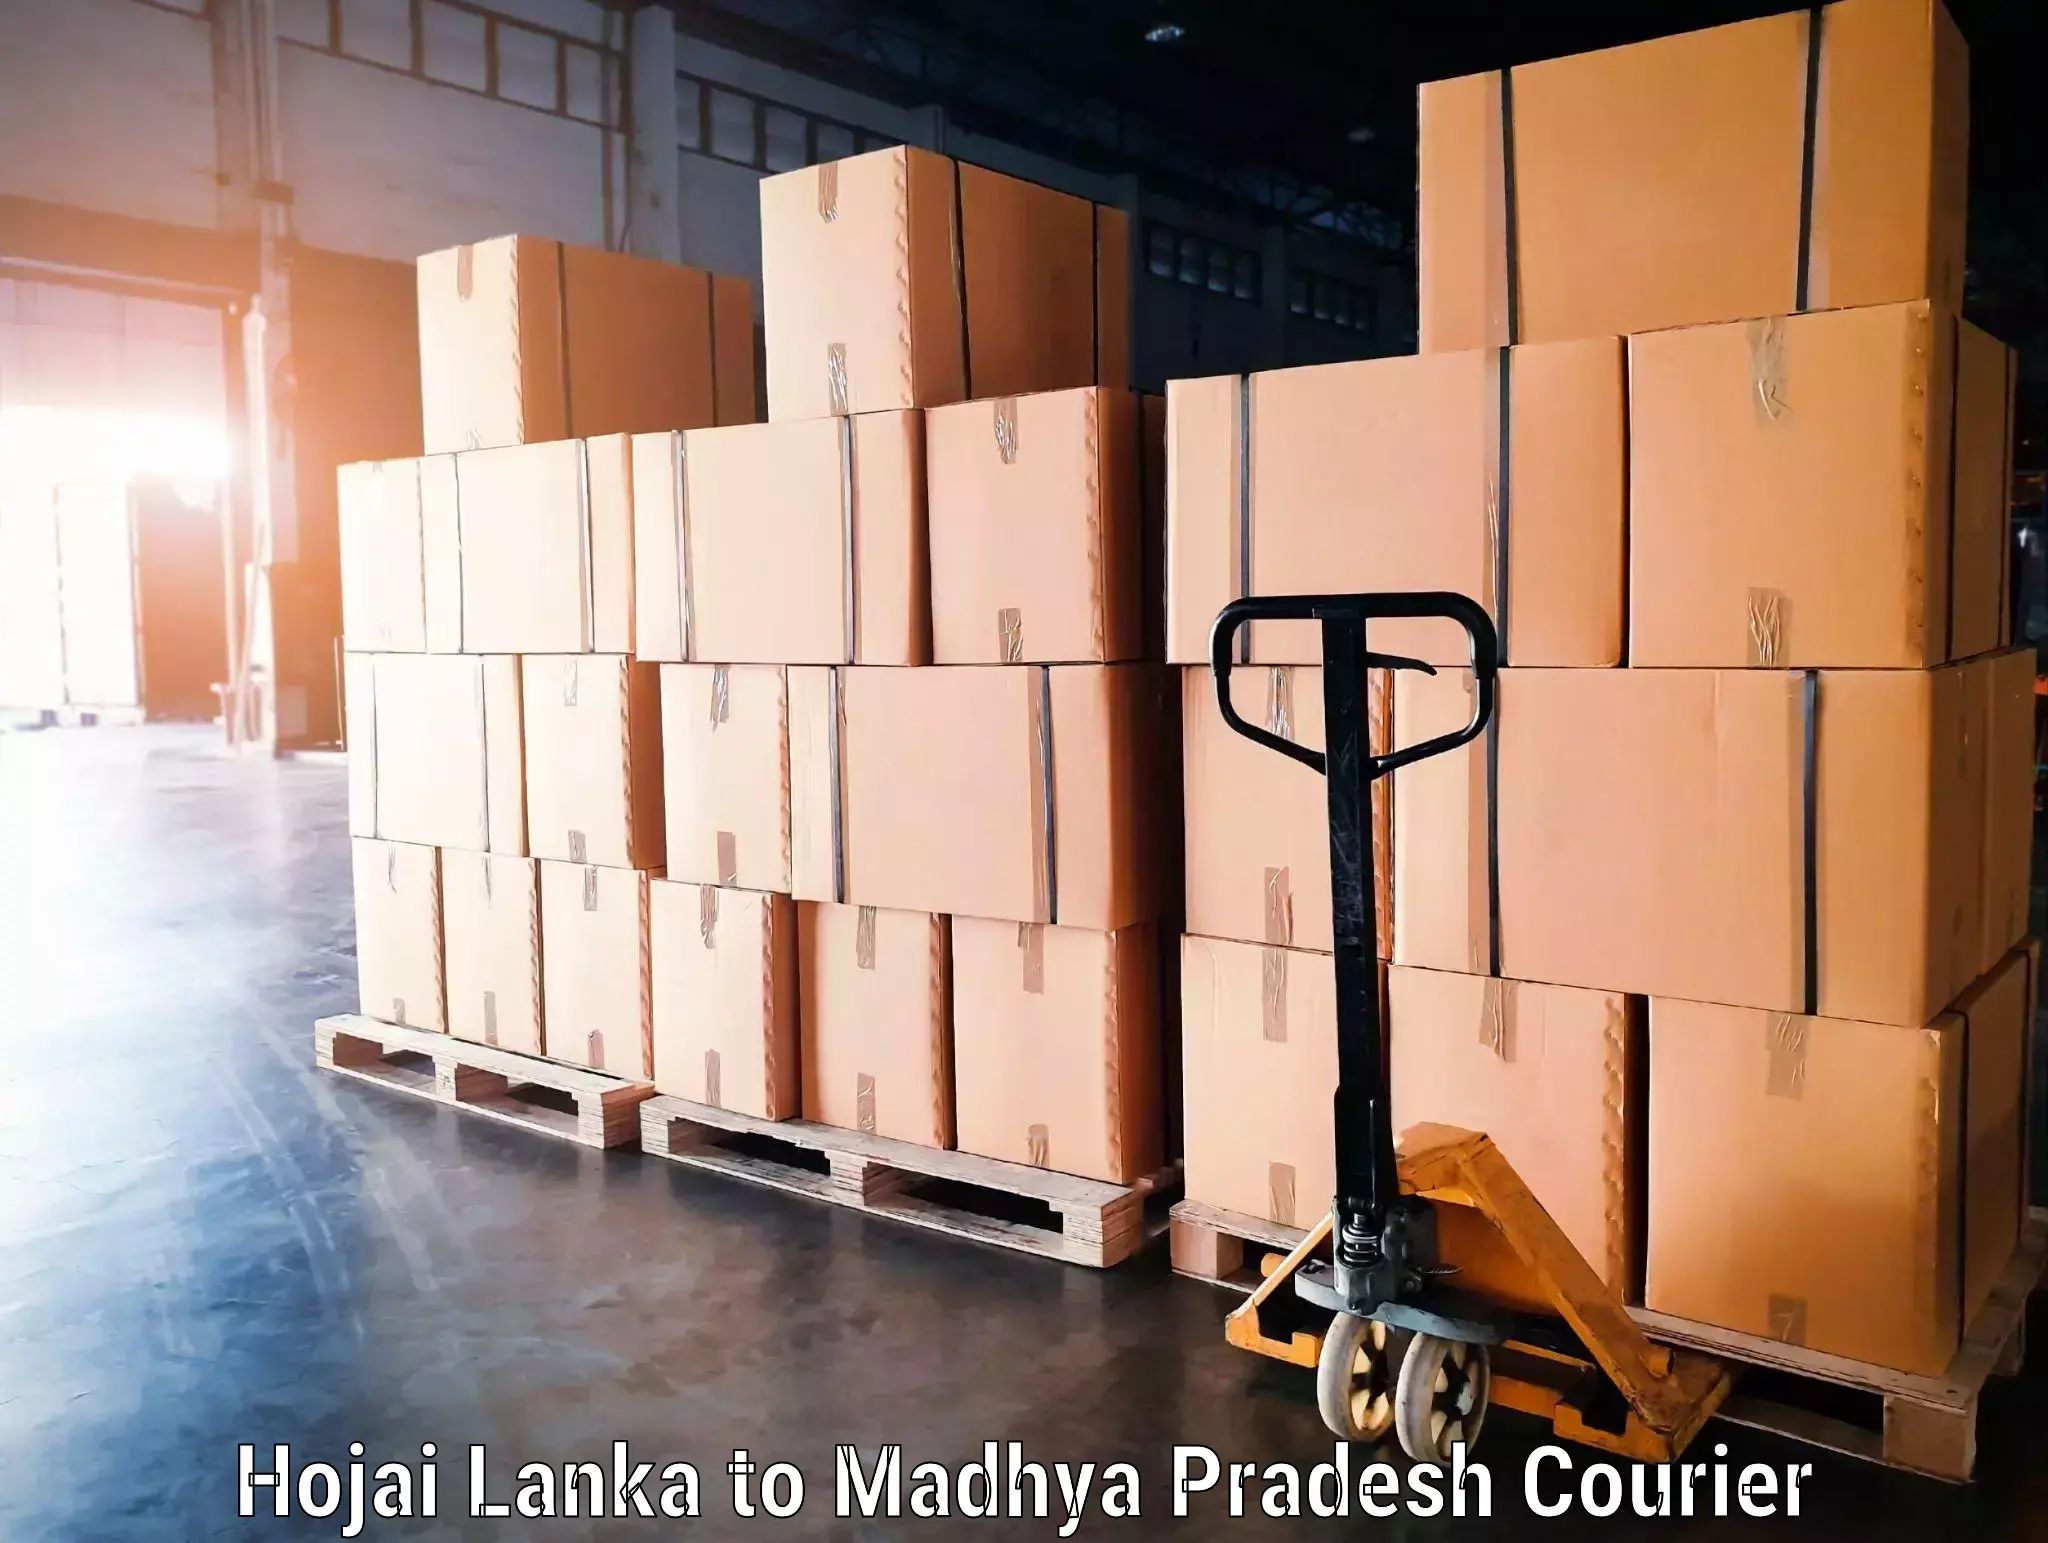 Hassle-free luggage shipping Hojai Lanka to Ganj Basoda